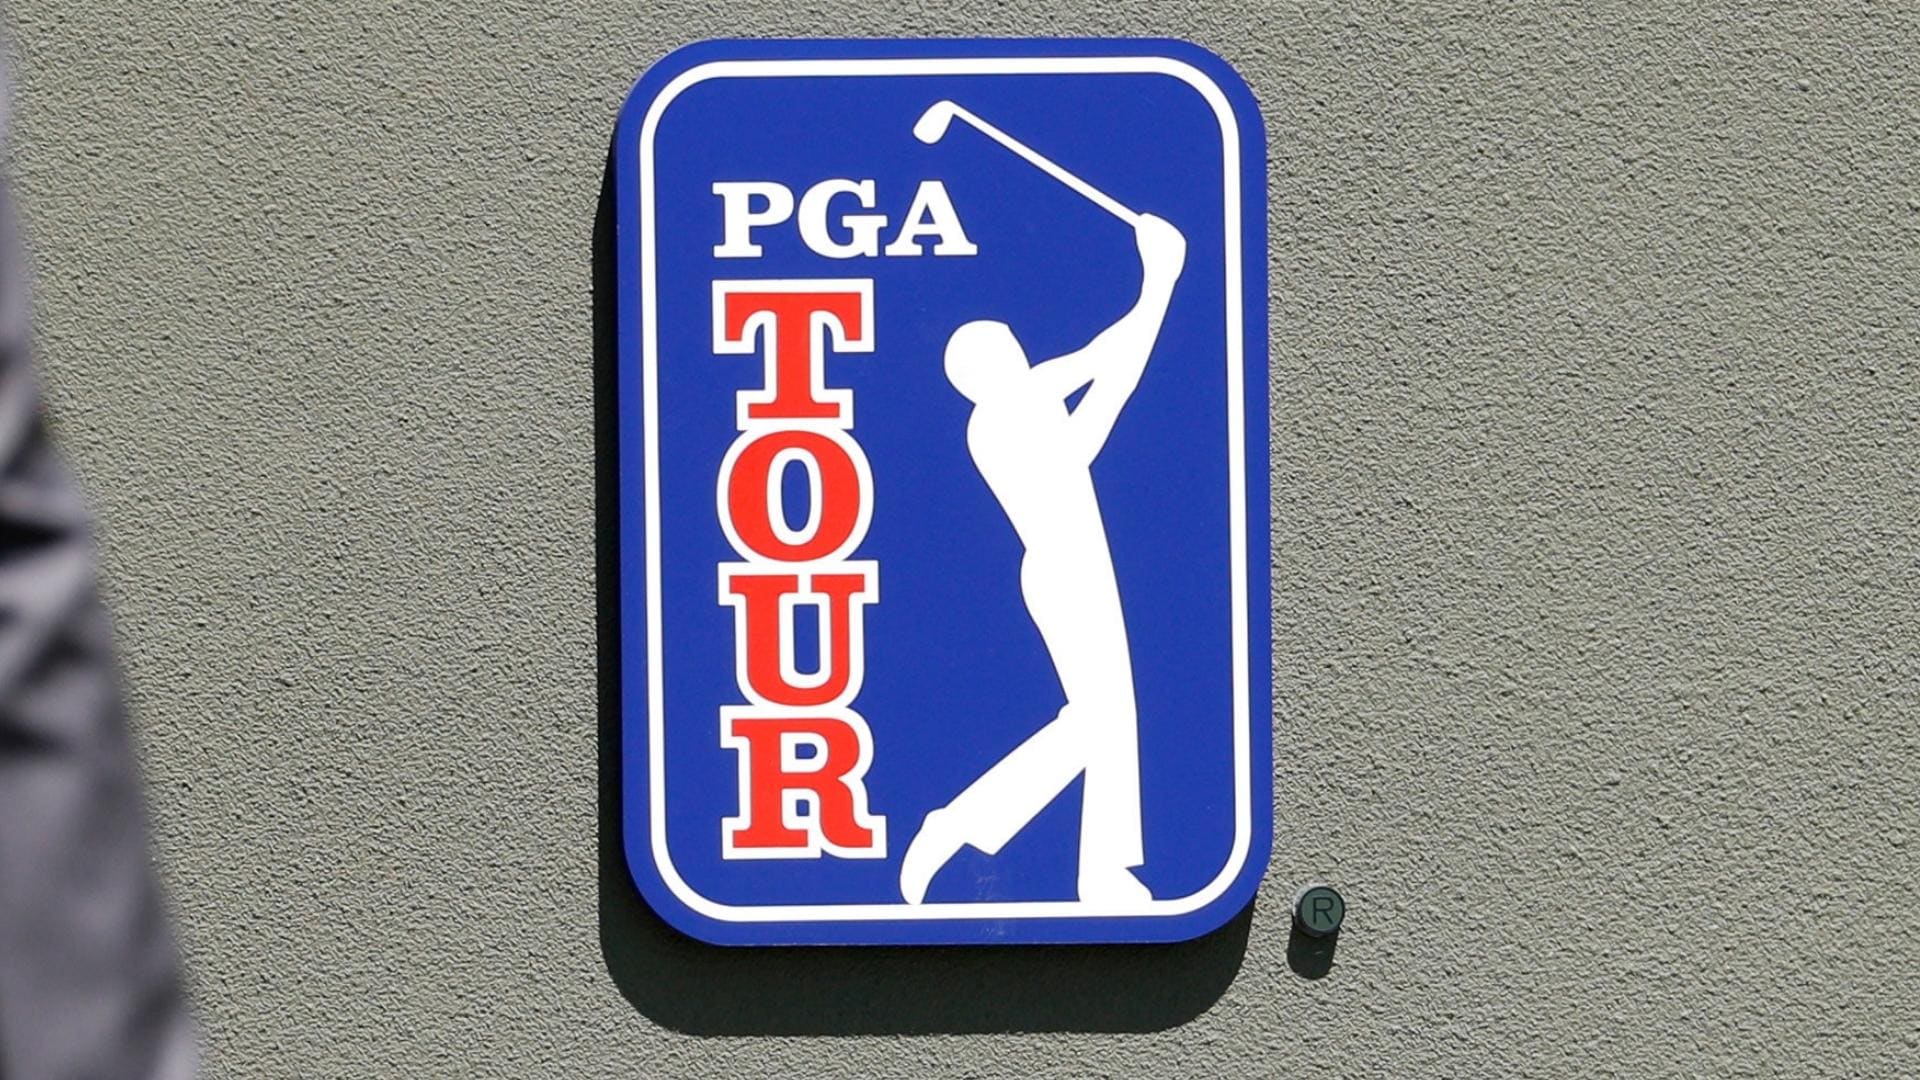 Senator introduces bills to revoke PGA Tour’s tax-exempt status